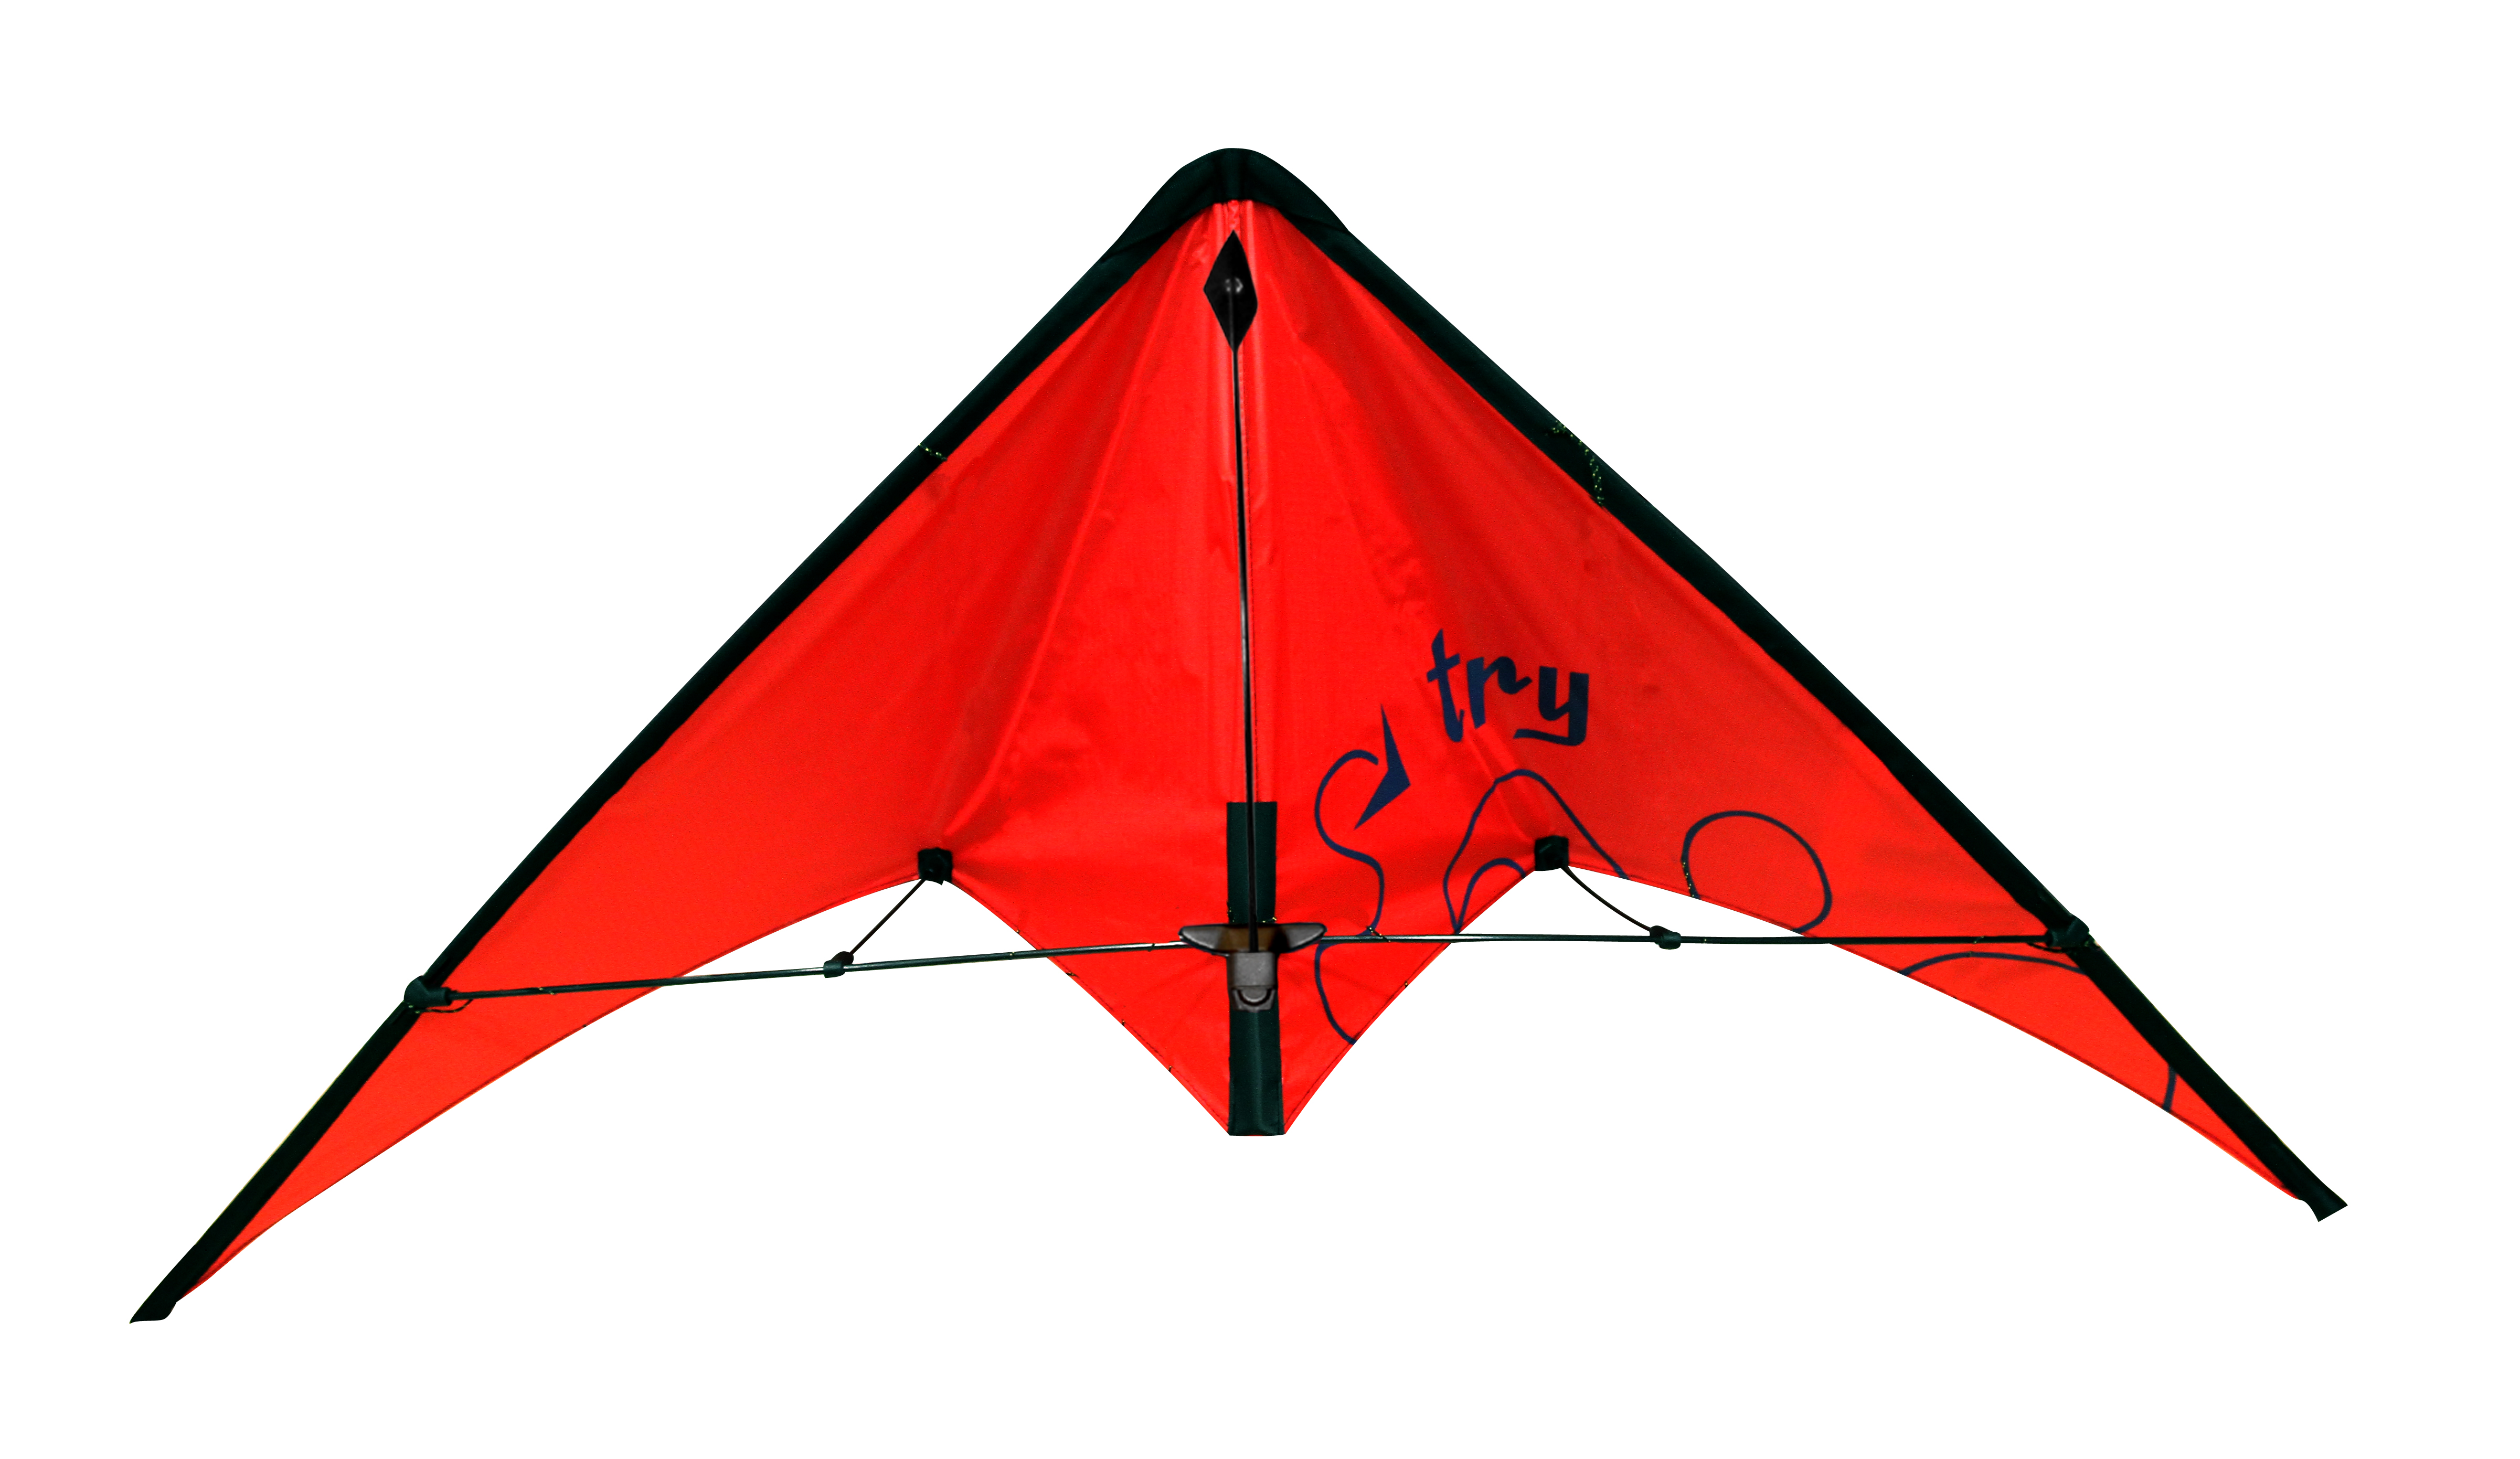 Buy EOLO PopUp Kite Stunt 110cm Try - 6 PK from TKC Sales Ltd.